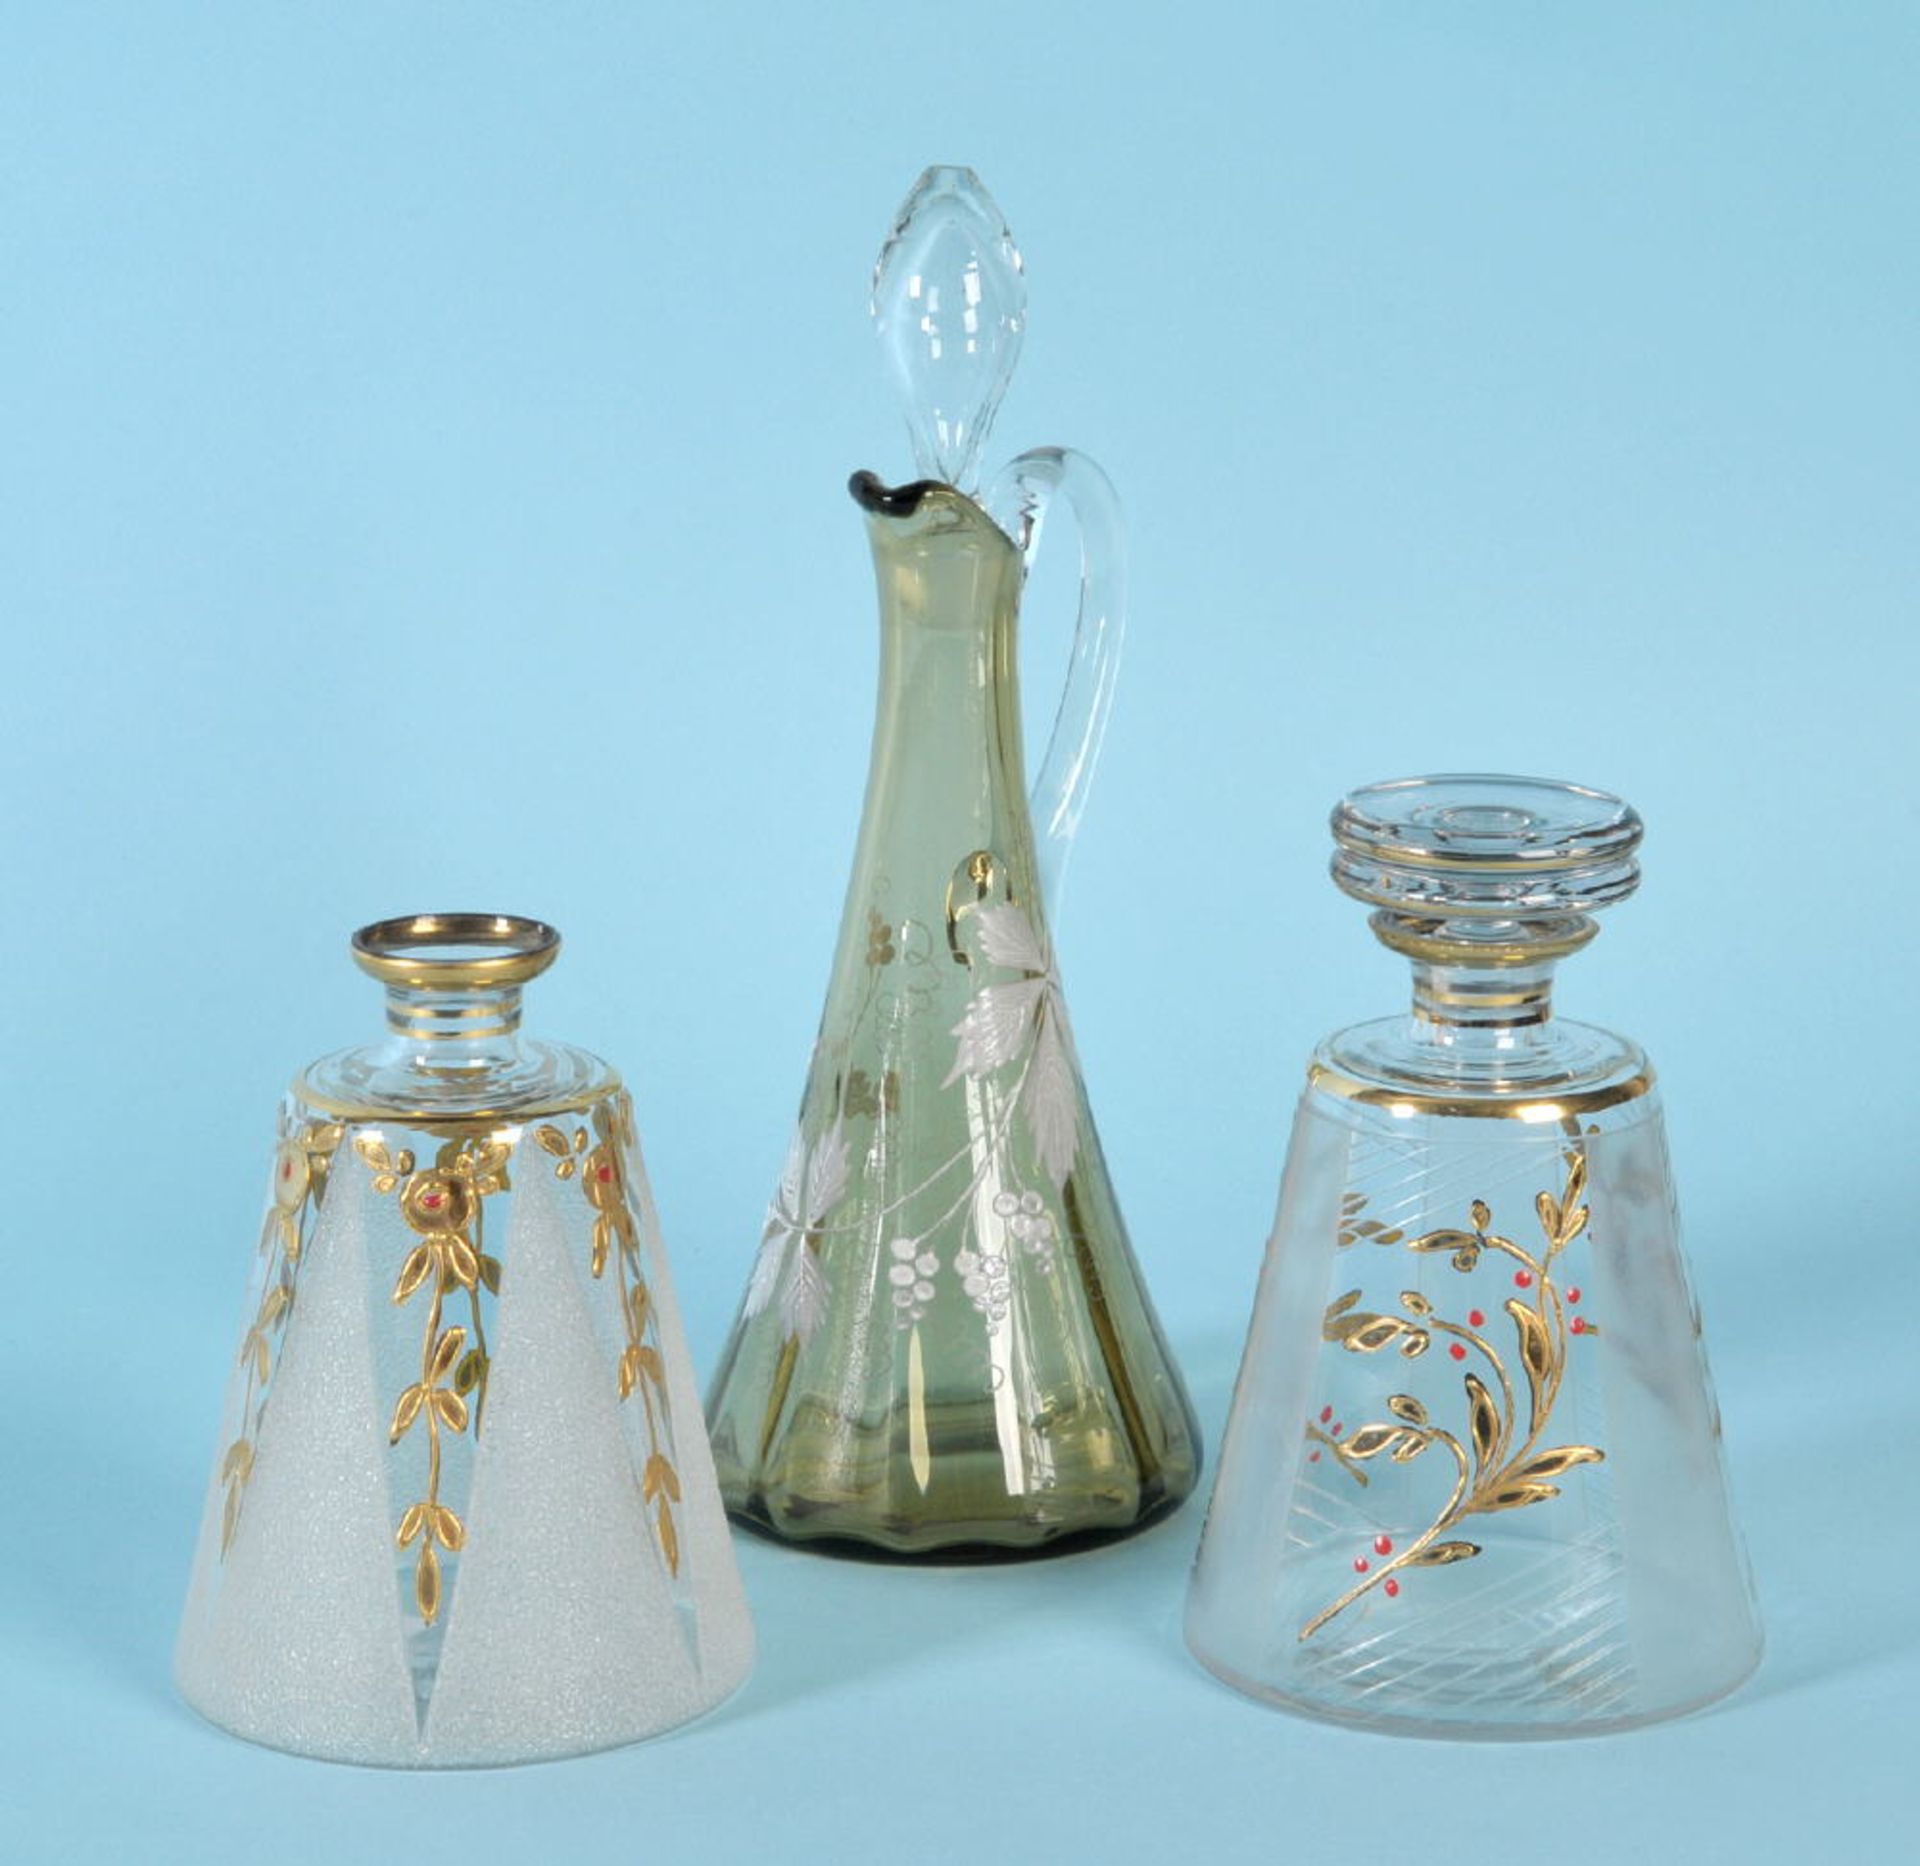 Karaffen, 3 Stückfarbloses Glas, handbemalt, versch. Formen u. Dekors, 2 mit Stöpseln, H= 13-25 cm